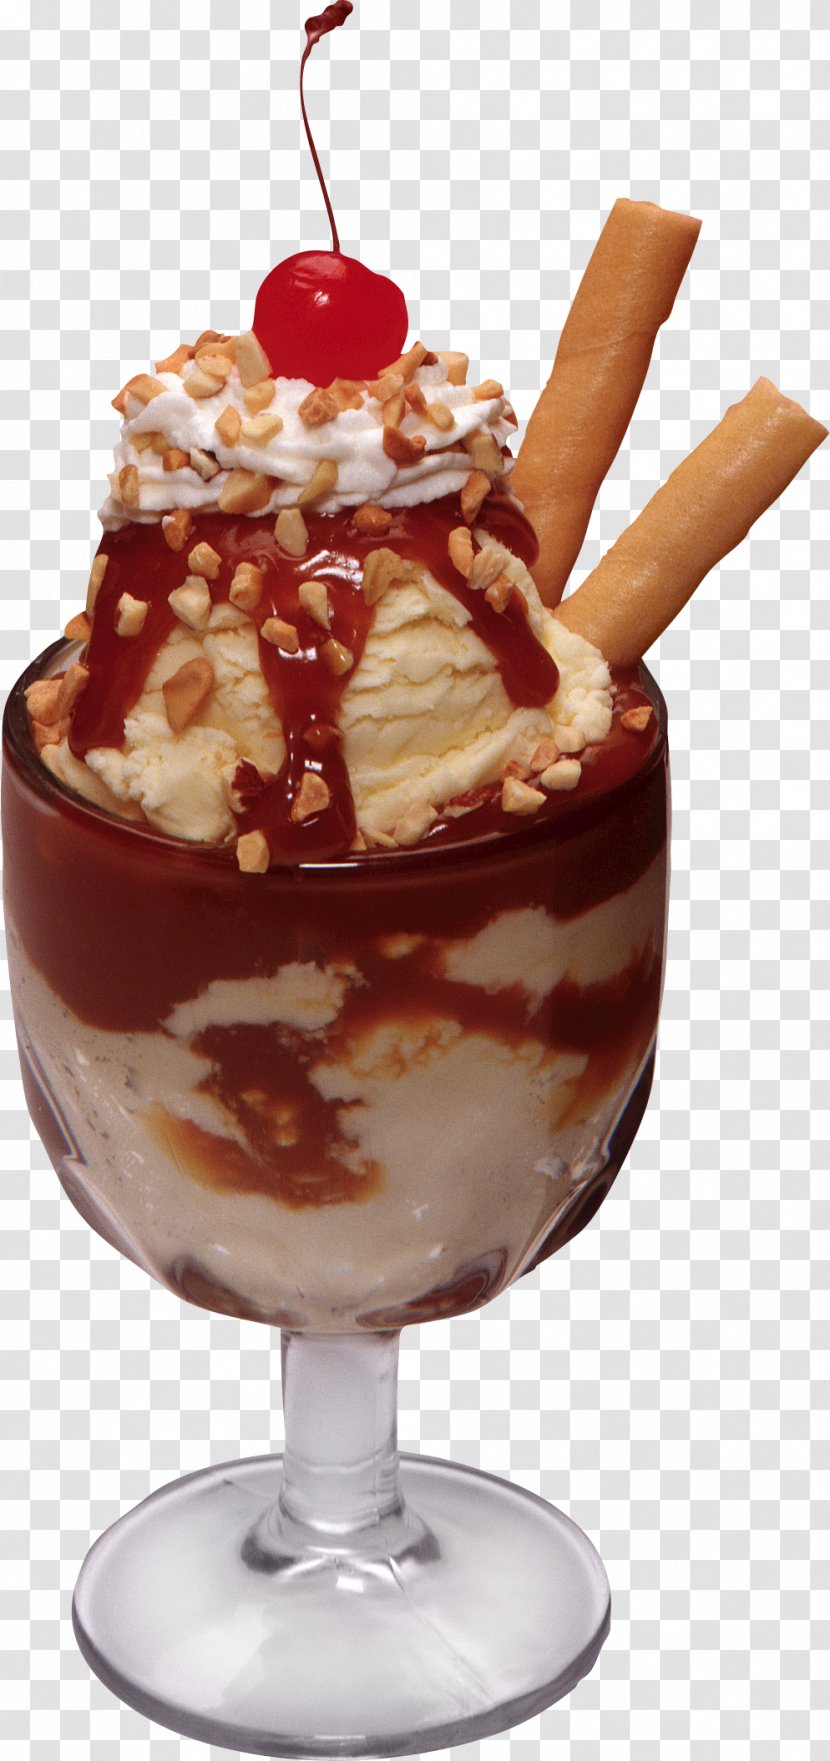 Ice Cream Cone Sundae Cupcake - Chocolate Syrup - Image Transparent PNG